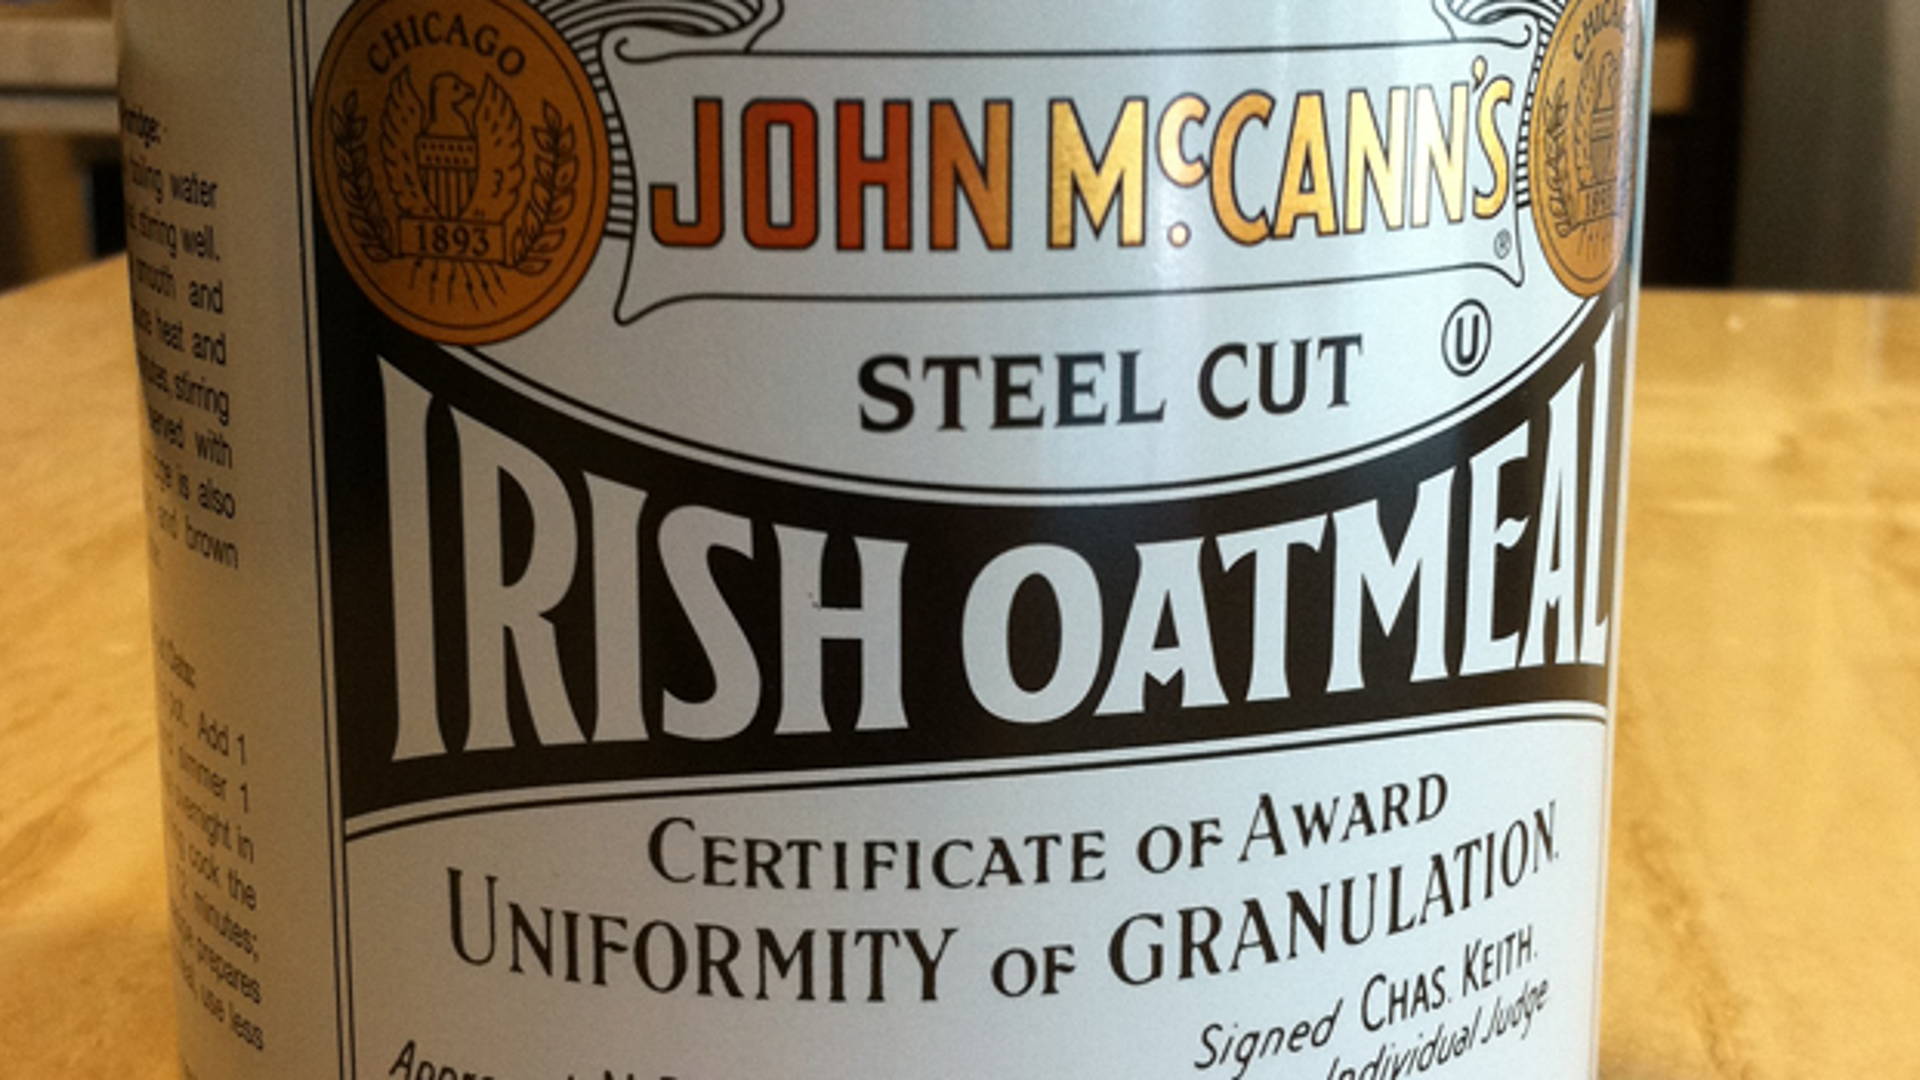 Featured image for John McCann's Irish Oatmeal 